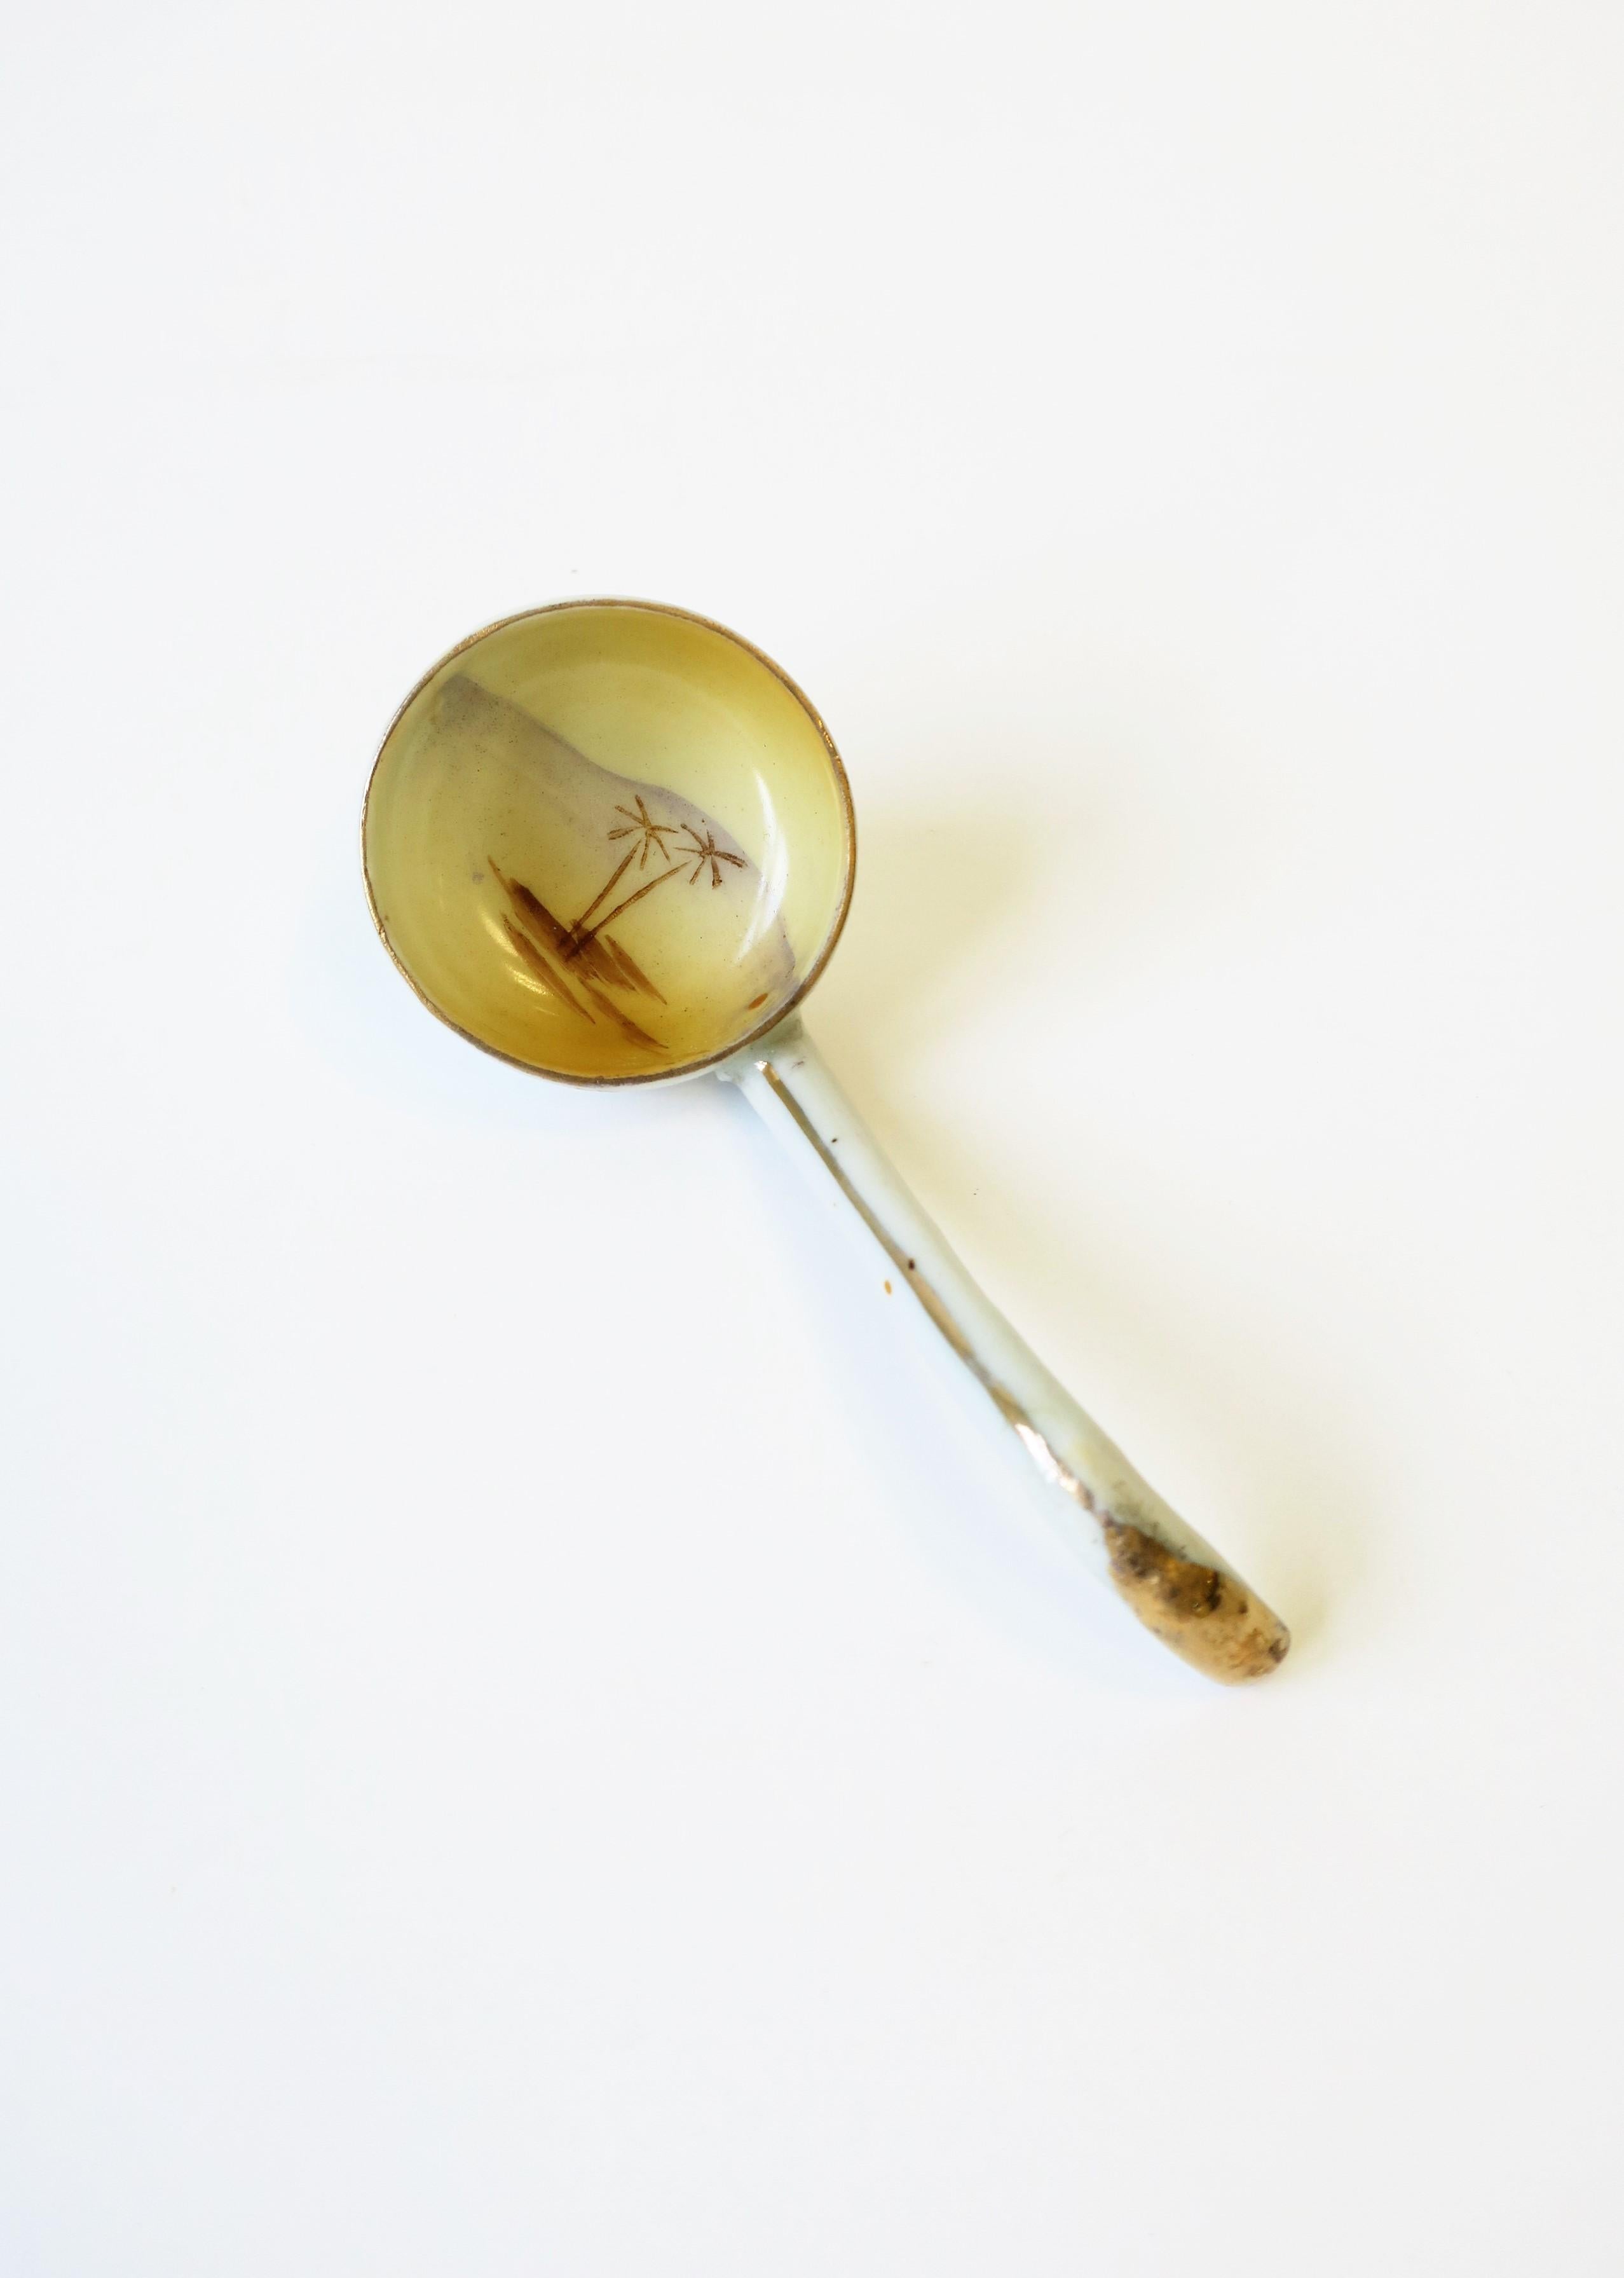 Porcelain Desert Palm Serving Set with Ladle Spoon For Sale 1